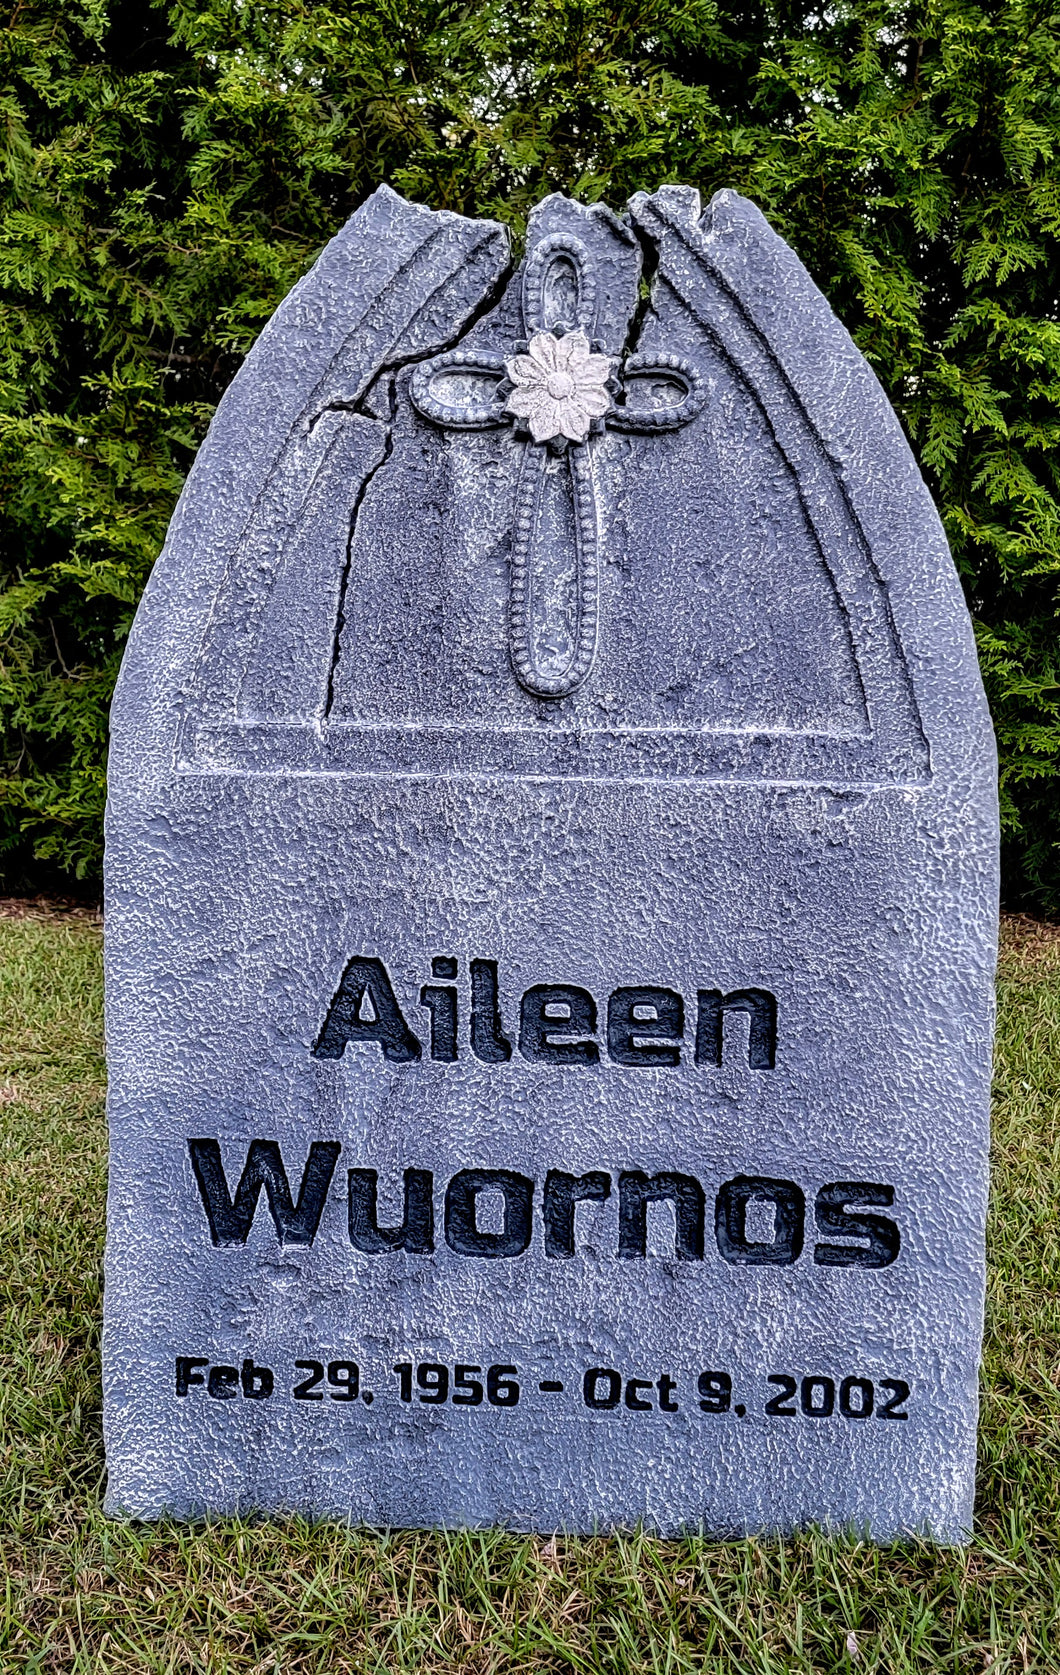 The Aileen Wuornos Tombstone